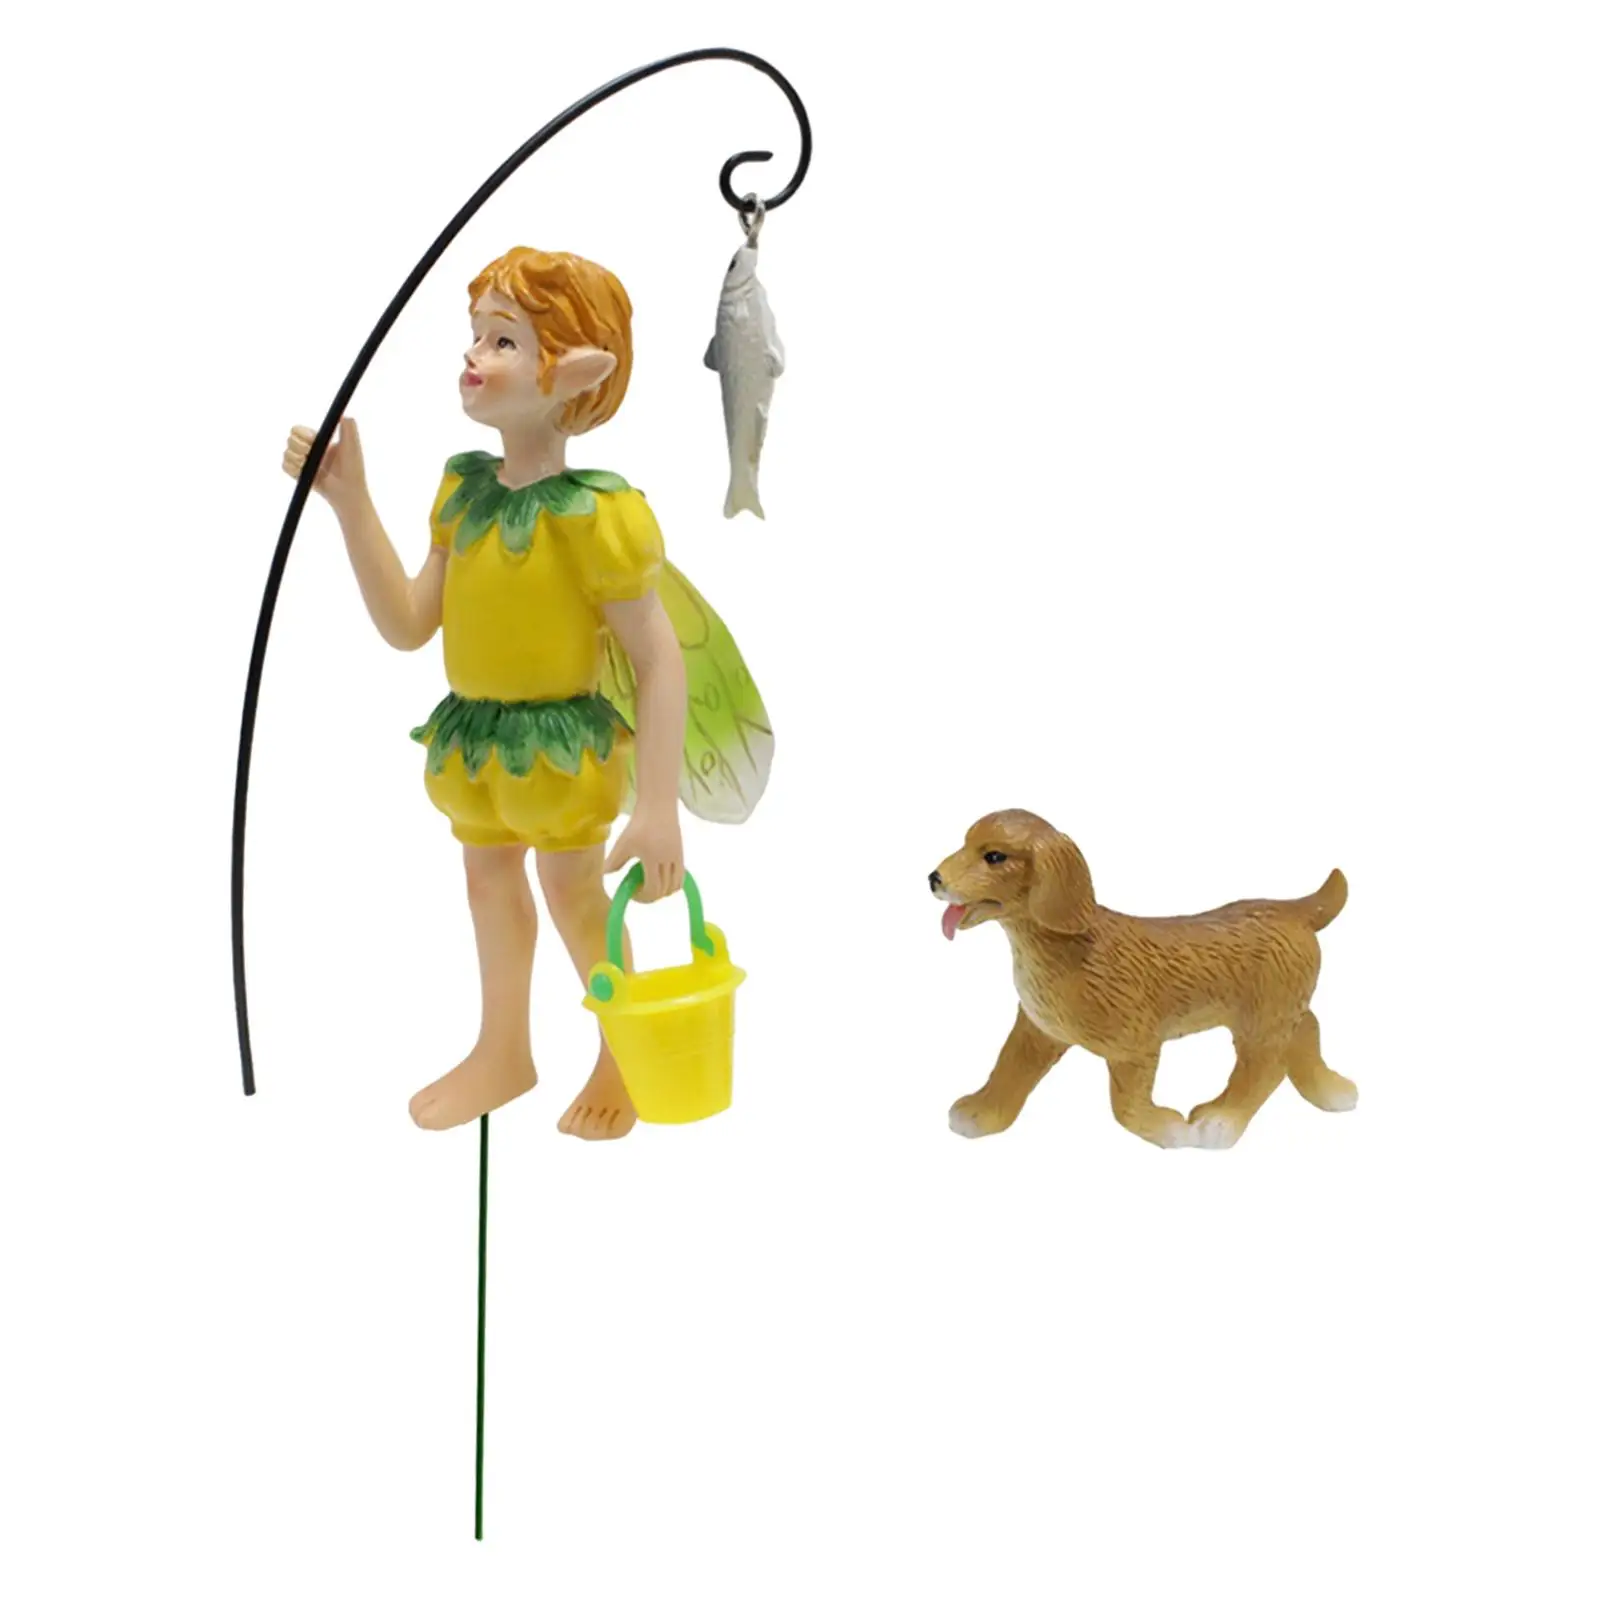 Fairy Garden Accessories Resin Gift Sculpture Statue Miniature Figurines for Garden Balcony Flowerpot Micro Landscape Dollhouse